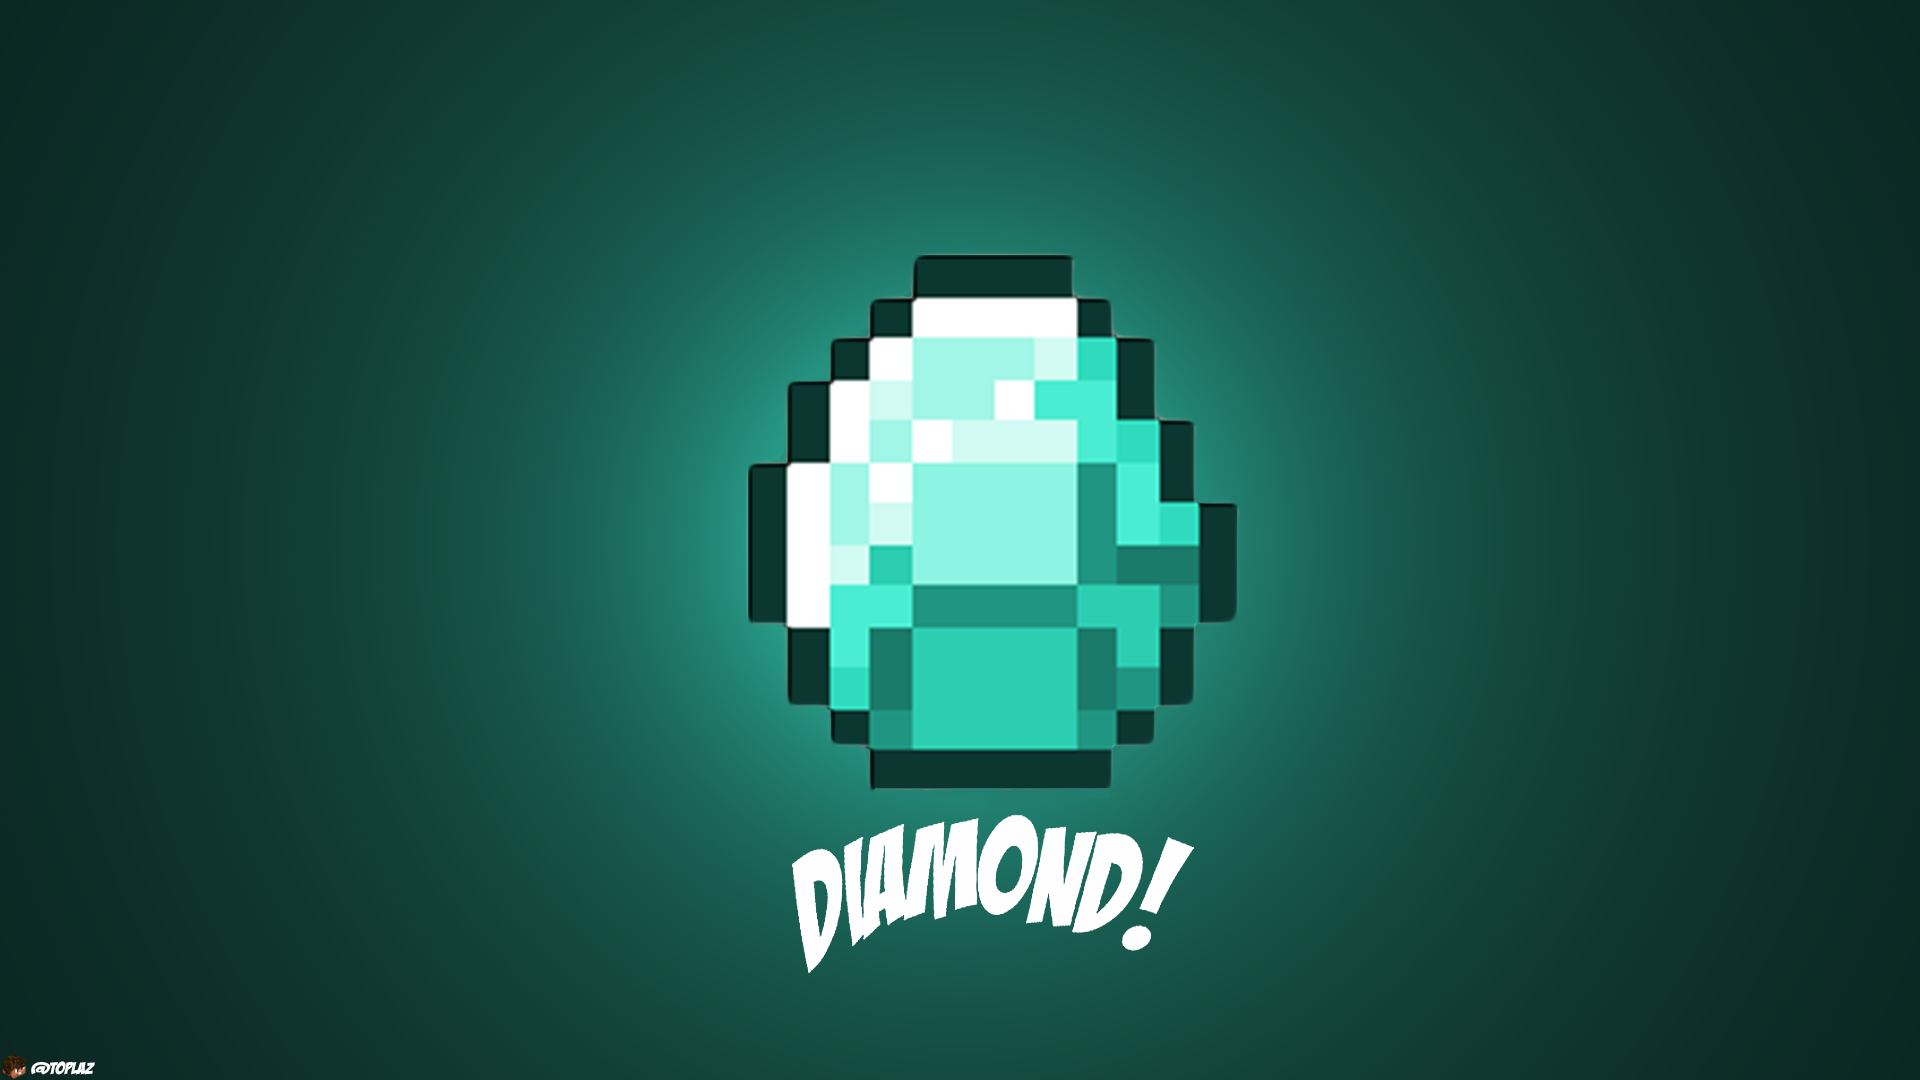 Share Minecraft Diamond Wallpaper HD Gallery To The